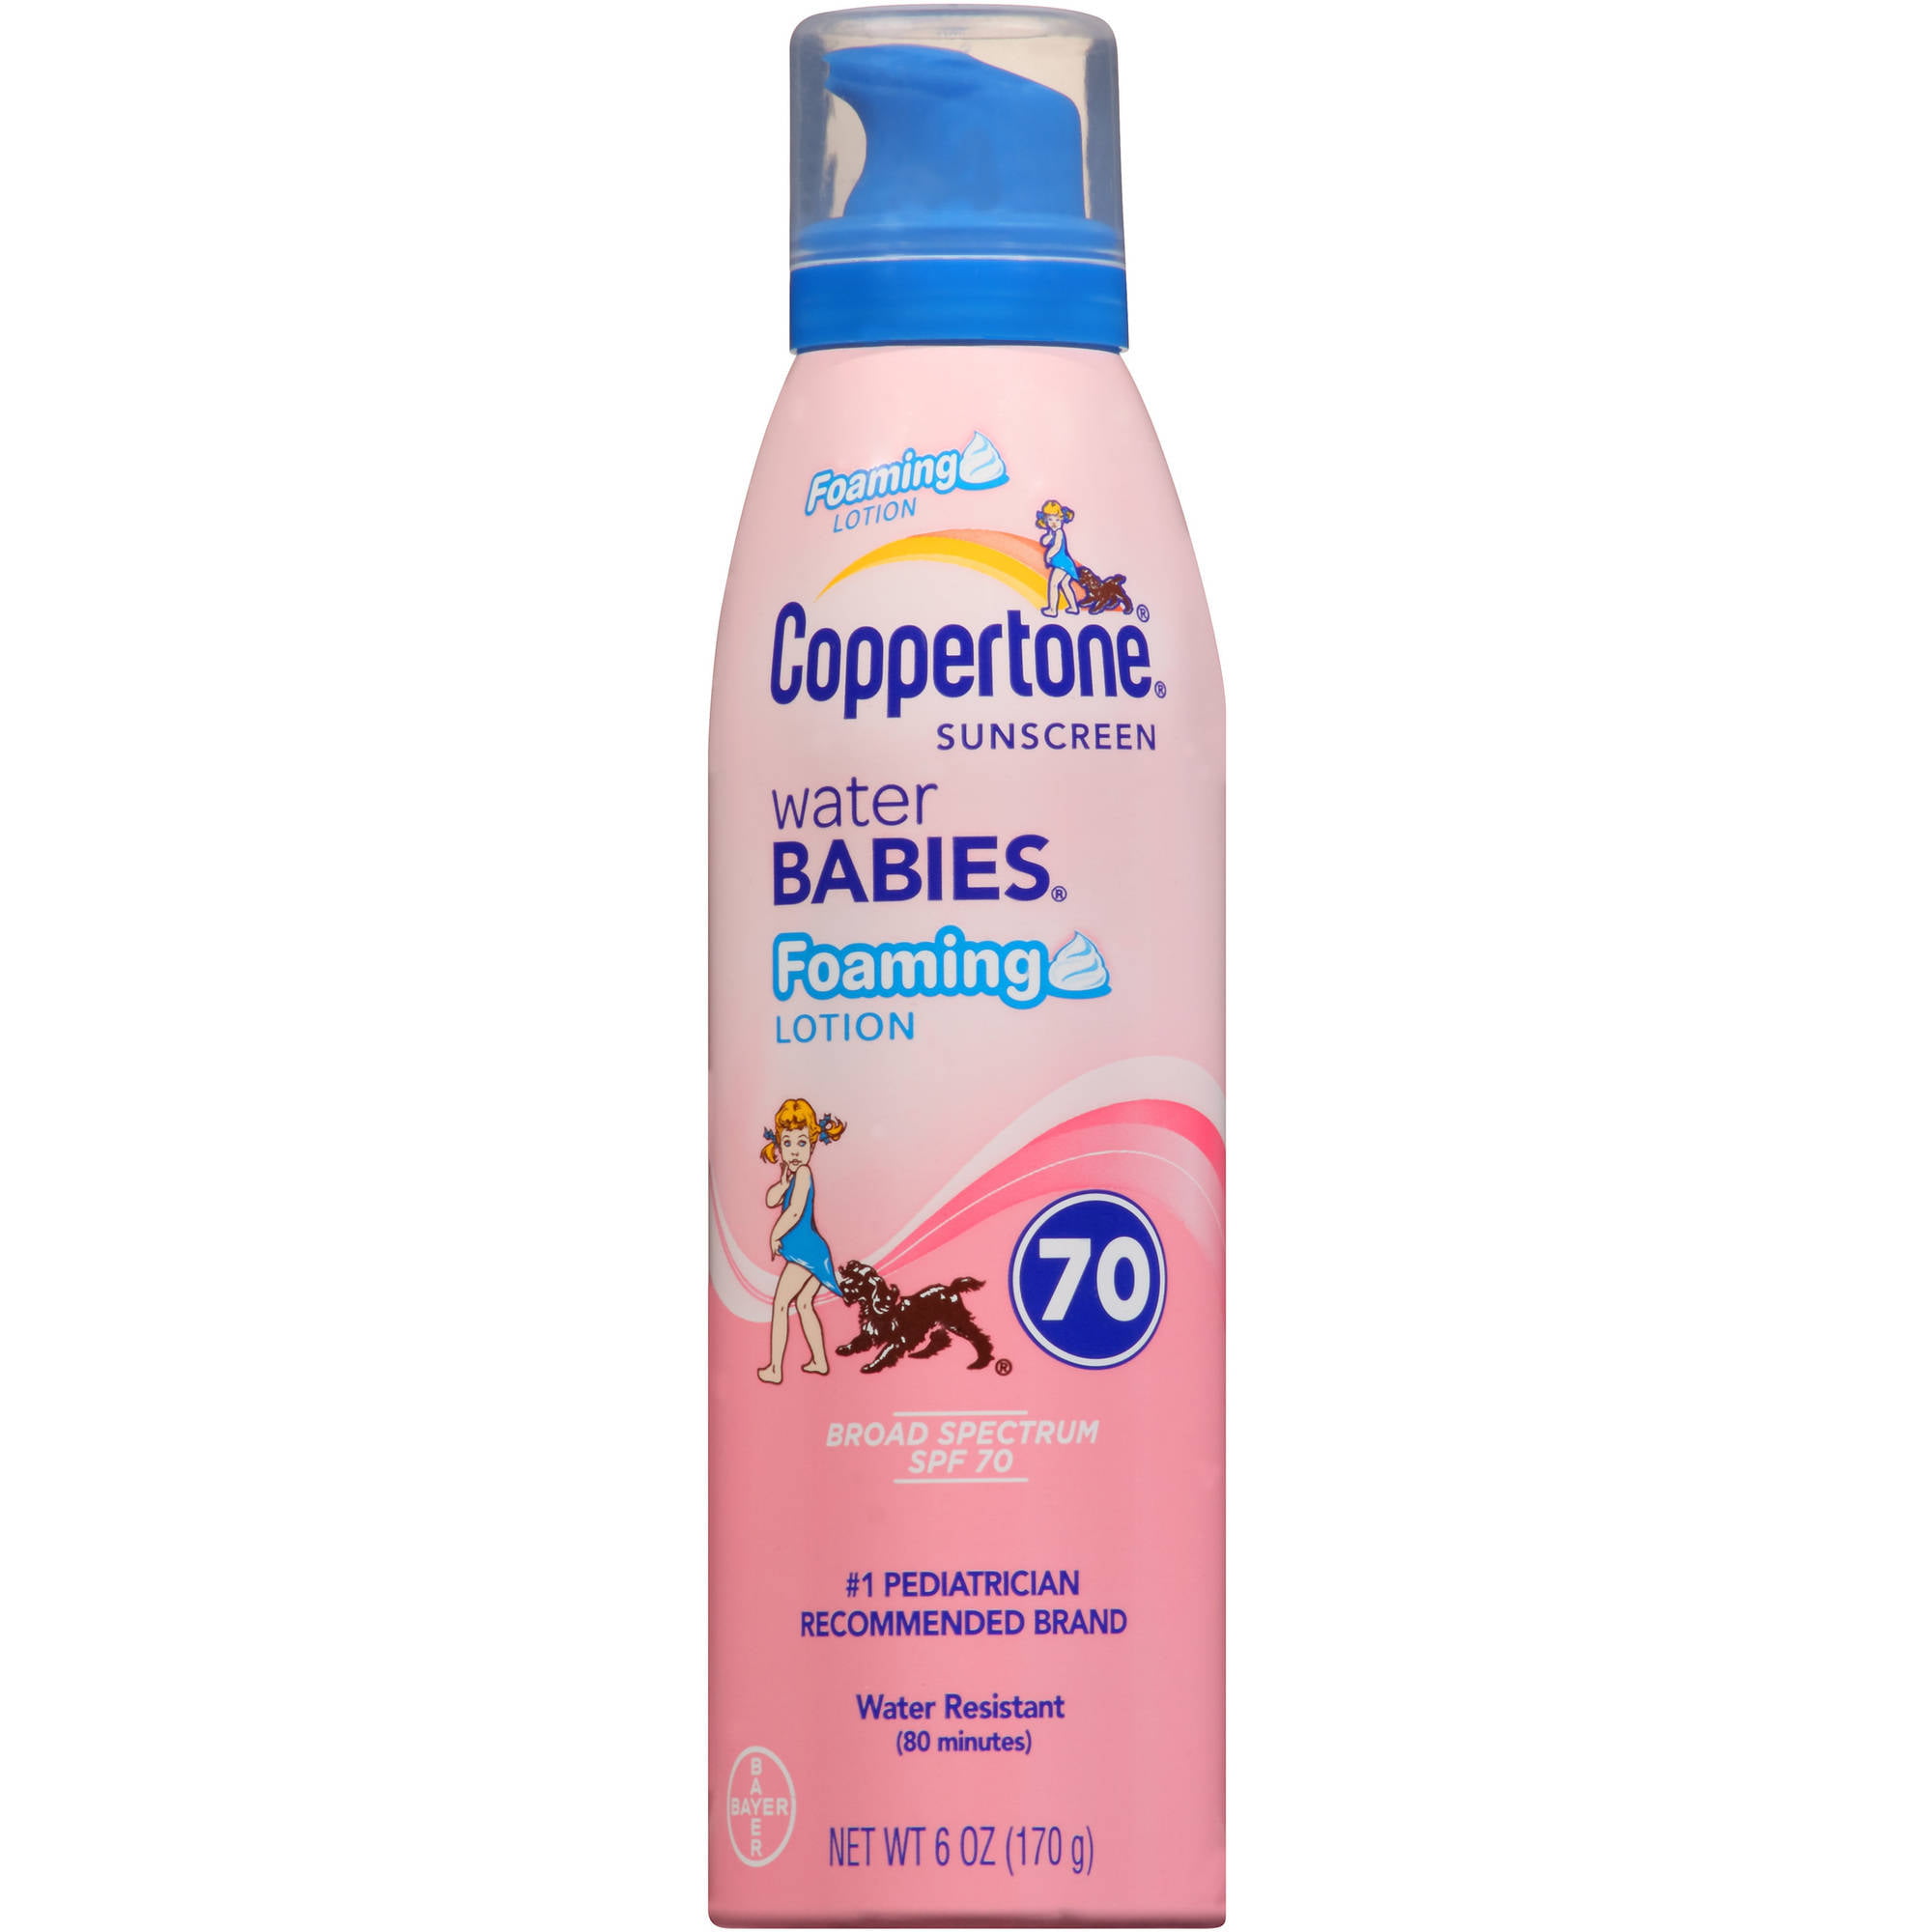 Coppertone Water Babies Sunscreen Lotion a $1.97 — Walmart